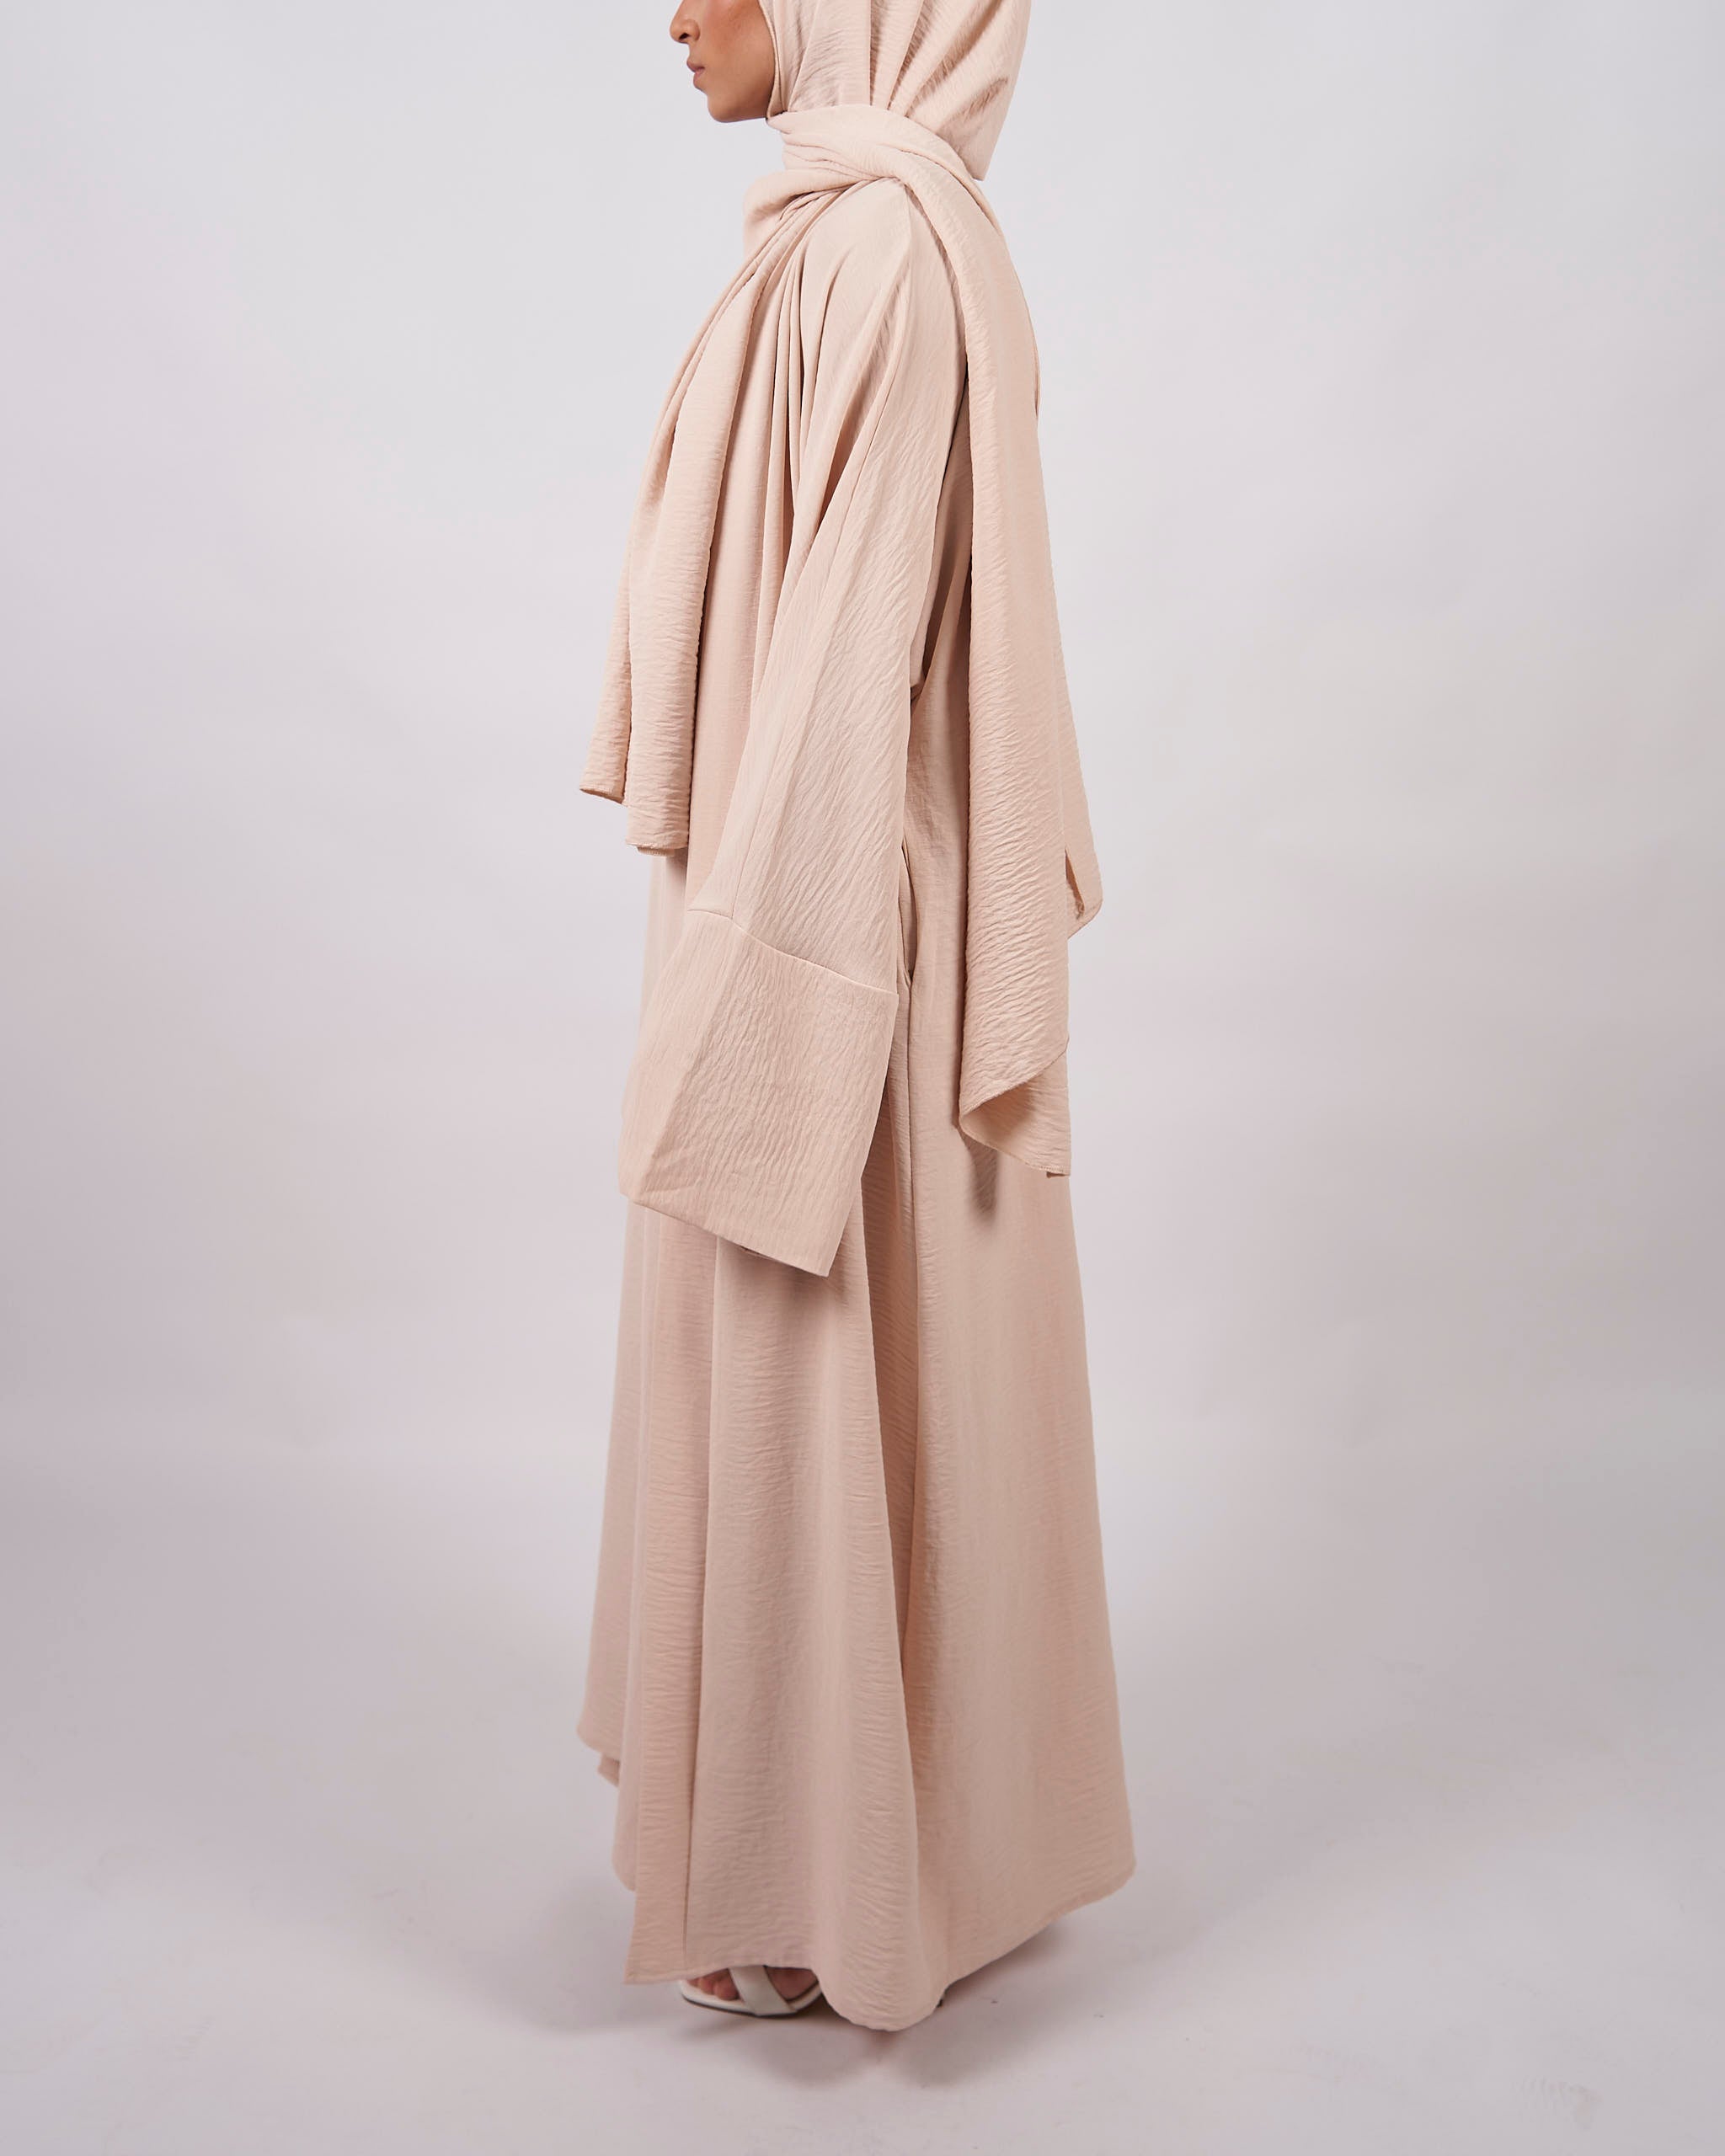 3 Piece Abaya Set - Cream - Open Abaya - Fajr Noor